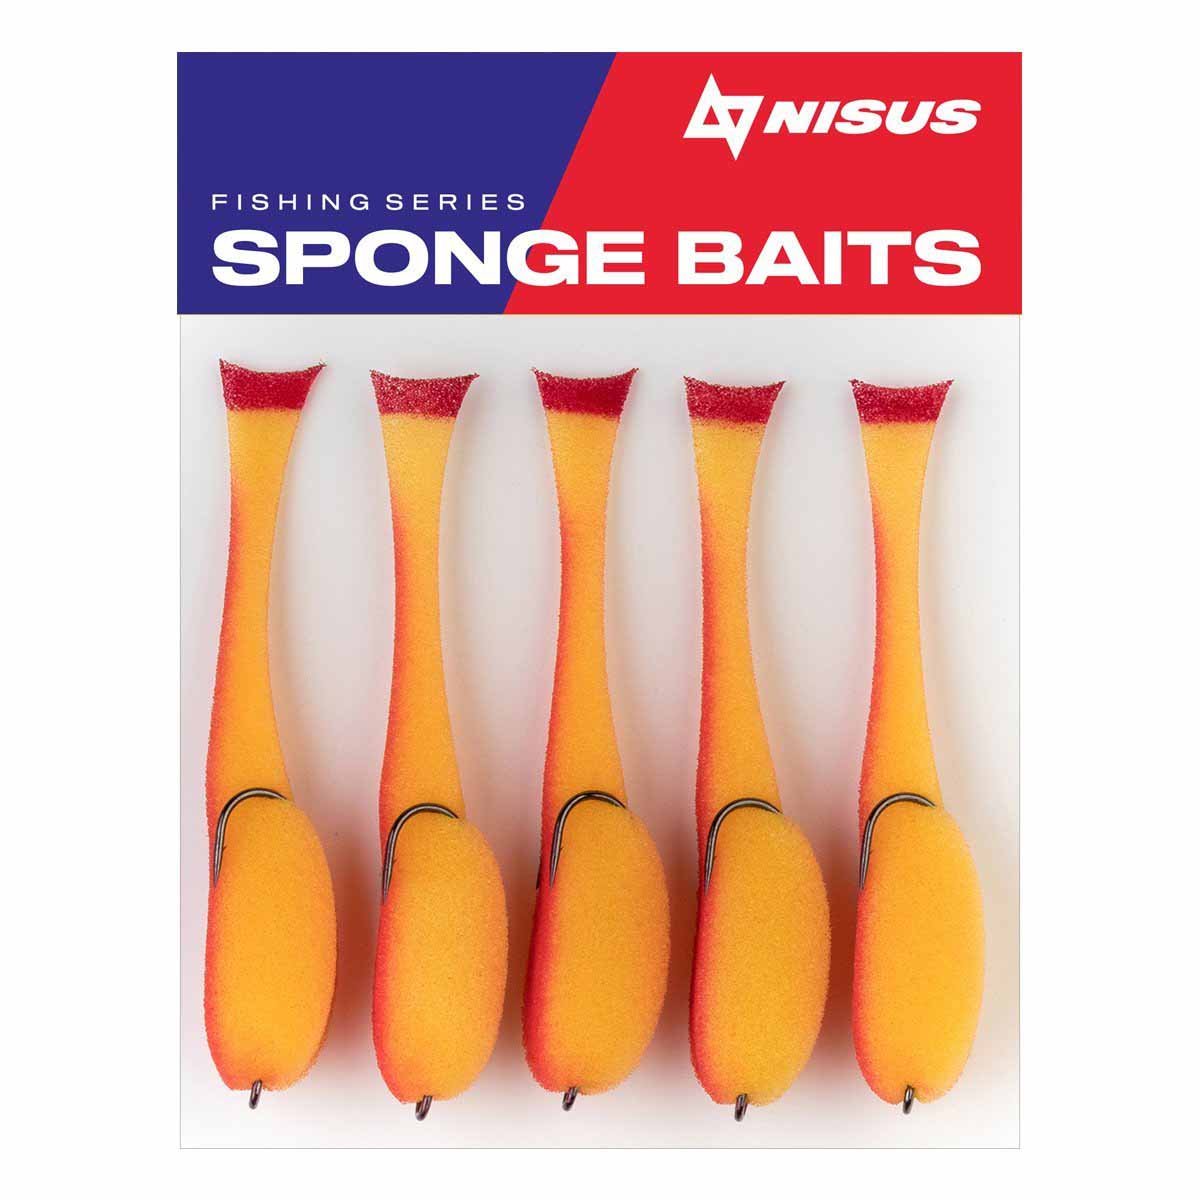 Nisus 3 inch Sponge Bait Fishing Lure, pack of 5